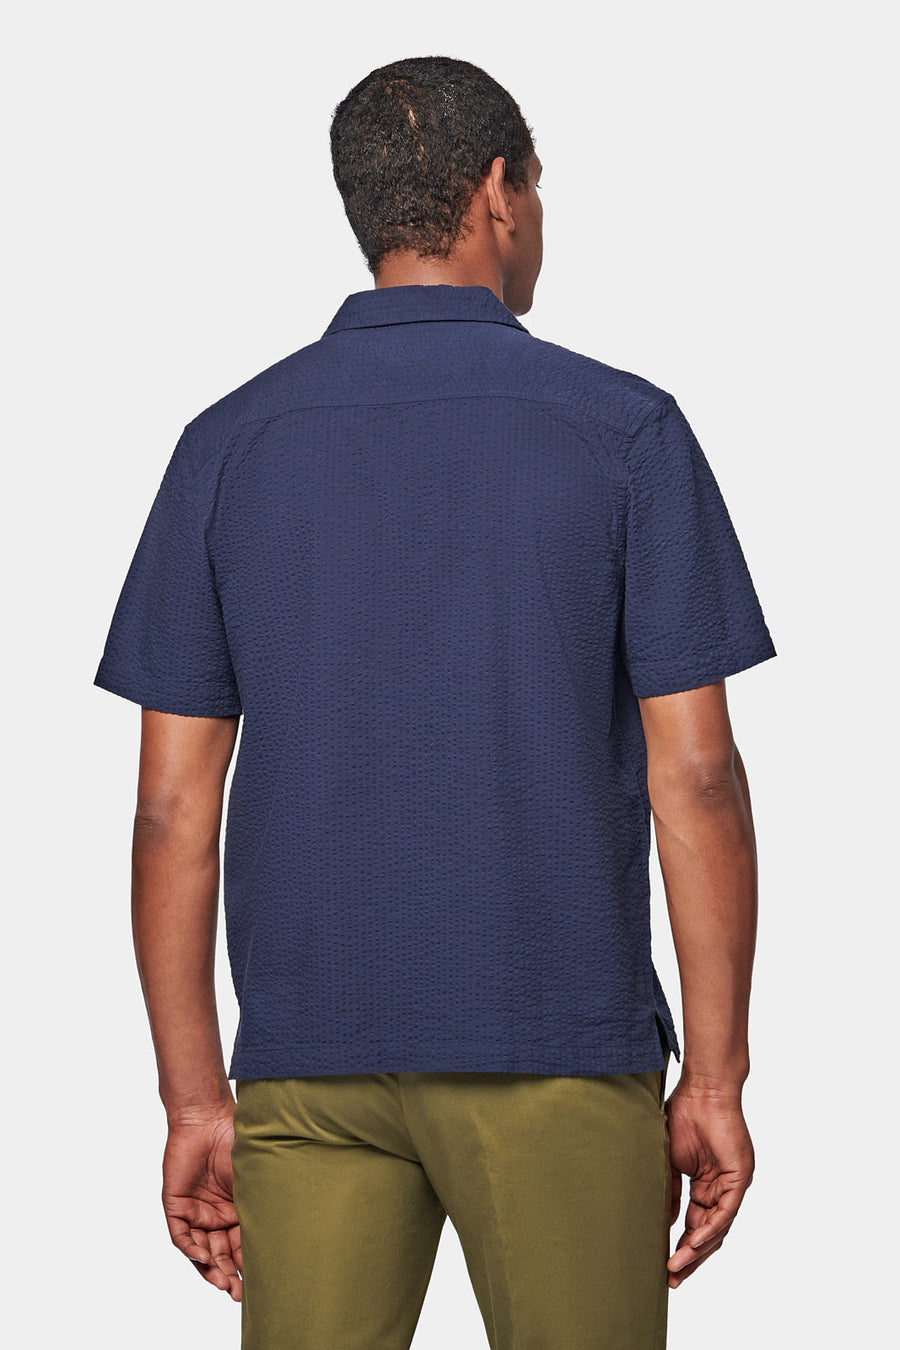 Casual Revere Collar Seersucker Short Sleeve Shirt in Navy Blue